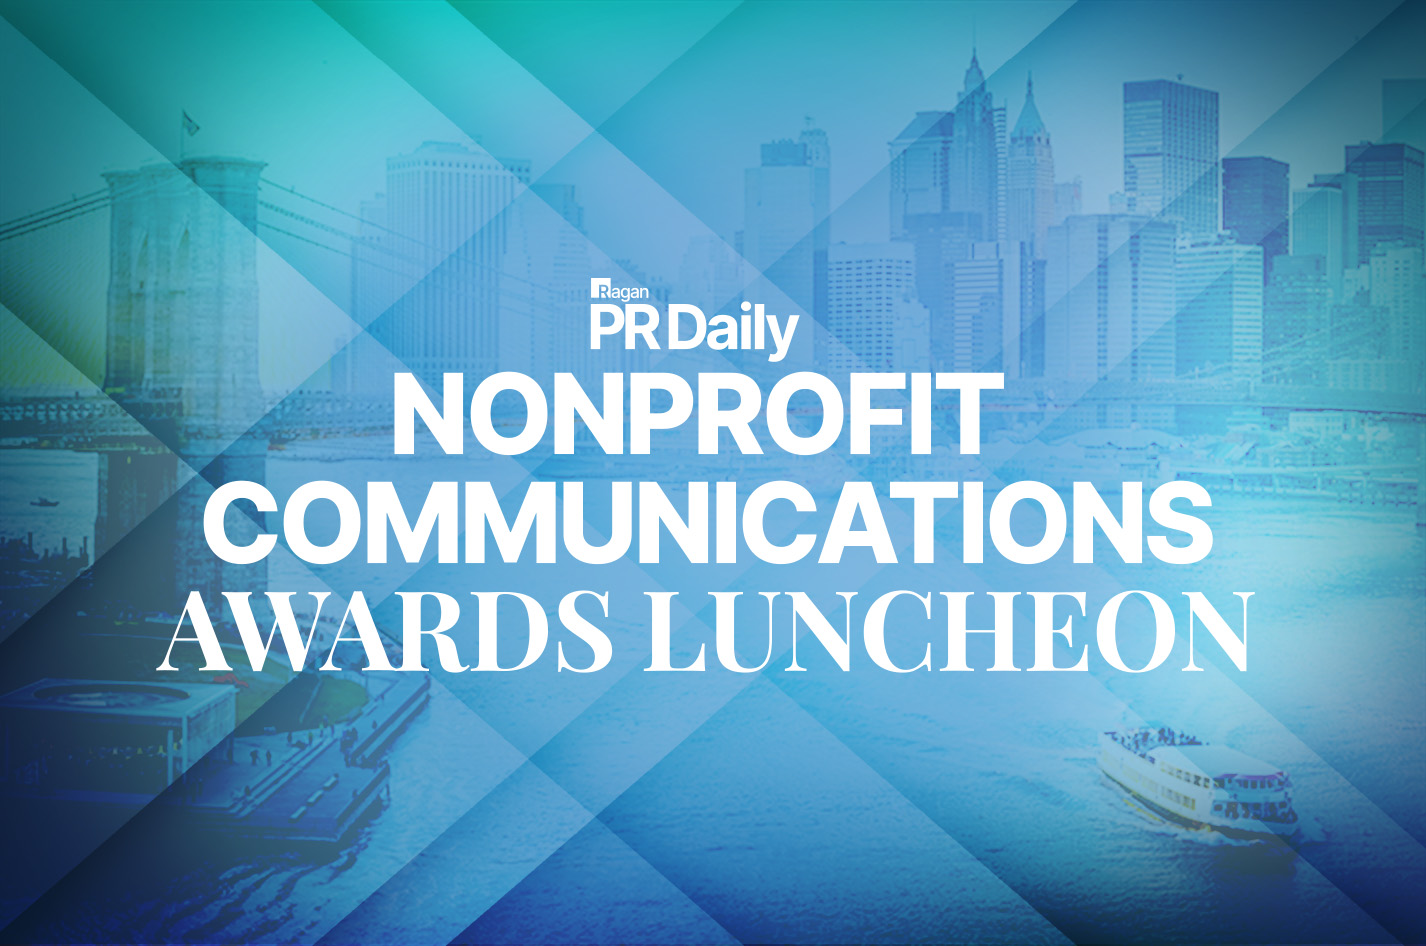 Nonprofit Communications Awards Luncheon